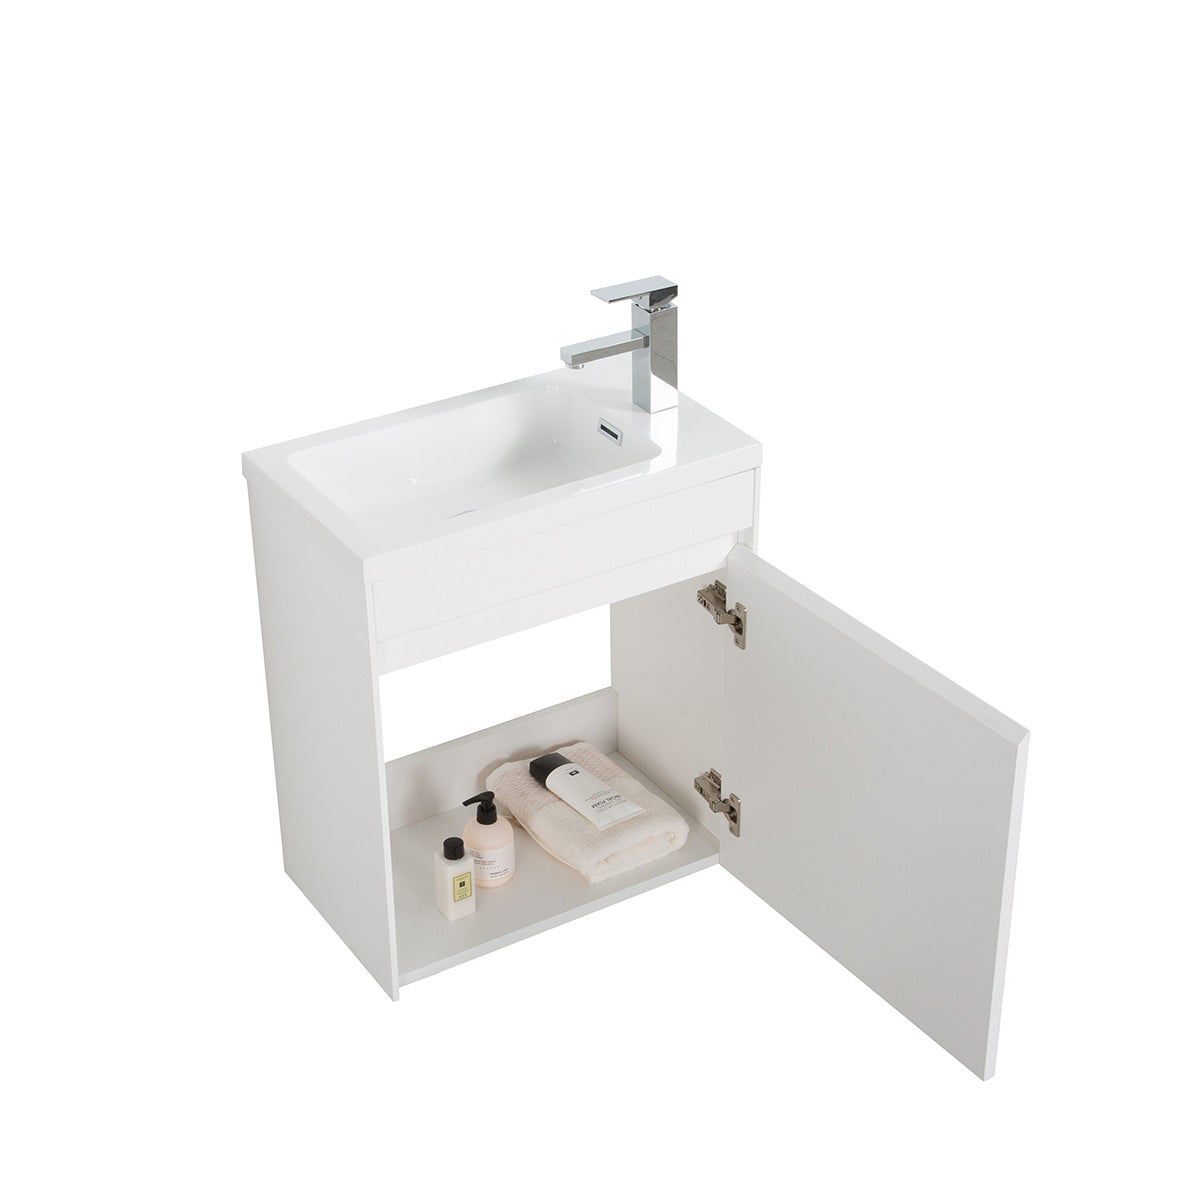 22" Slice Wall Hung Vanity & Acrylic Basin (Glossy White) V9017 Series - iStyle Bath